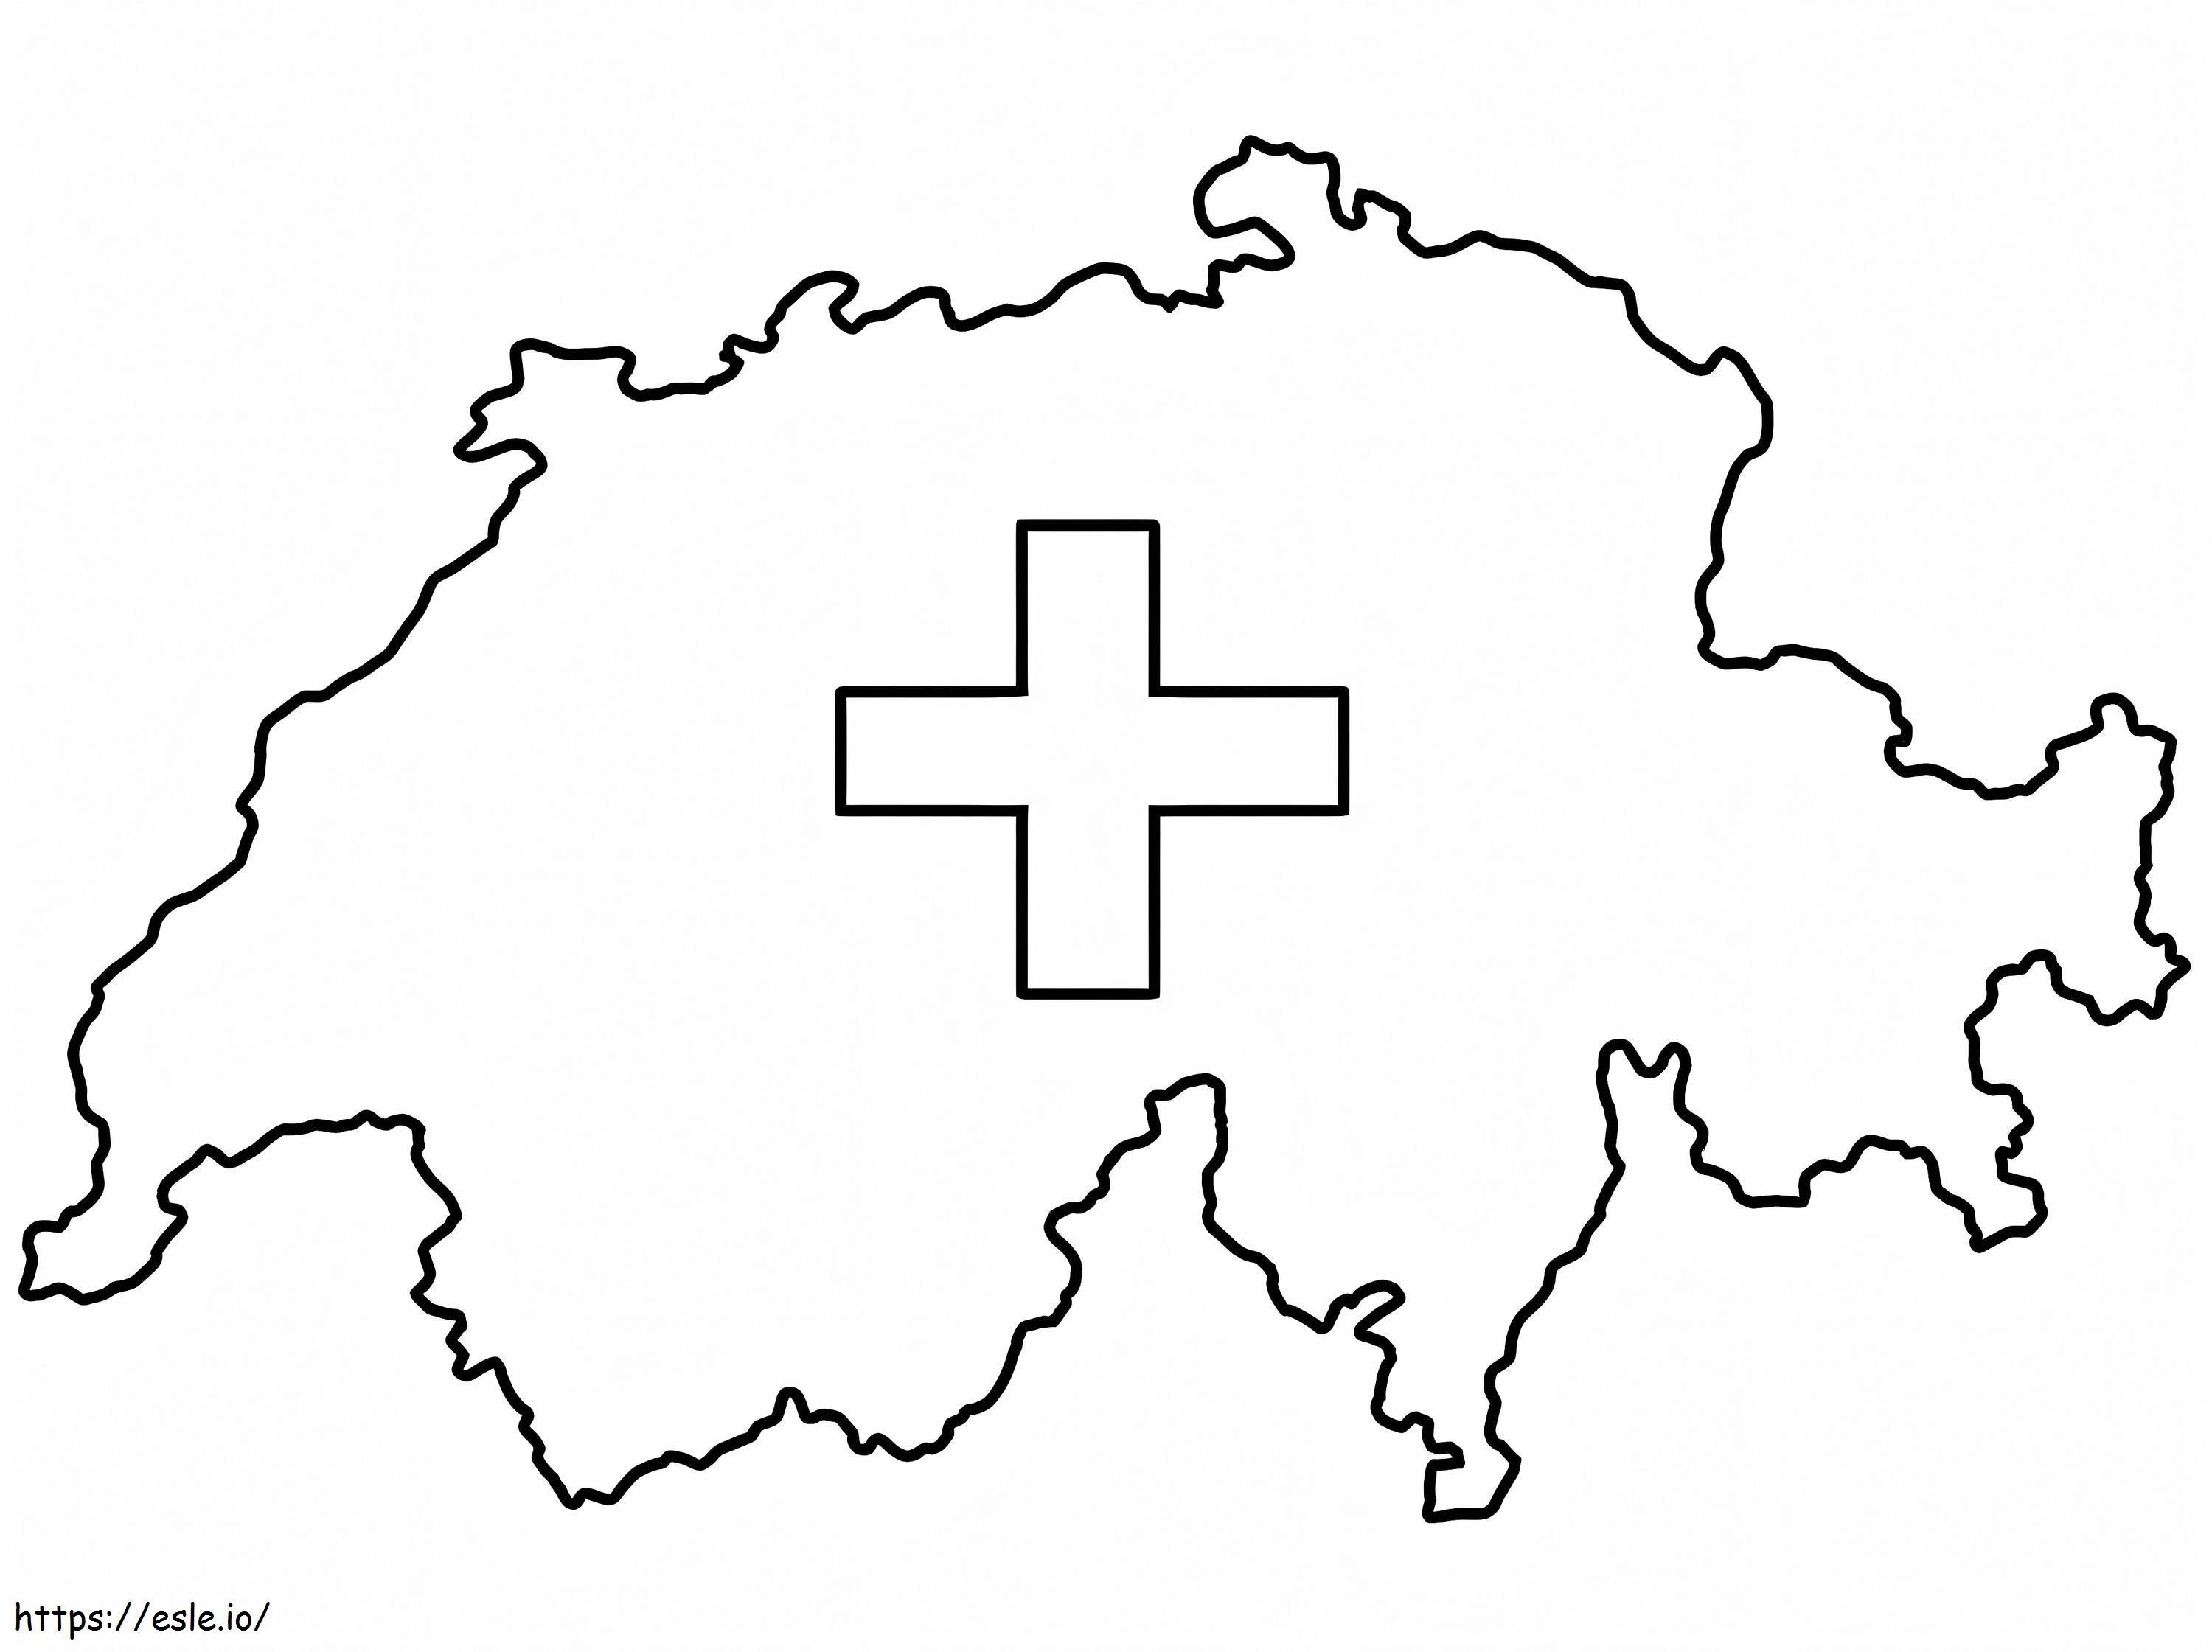 Mapa fácil de Suiza para colorear